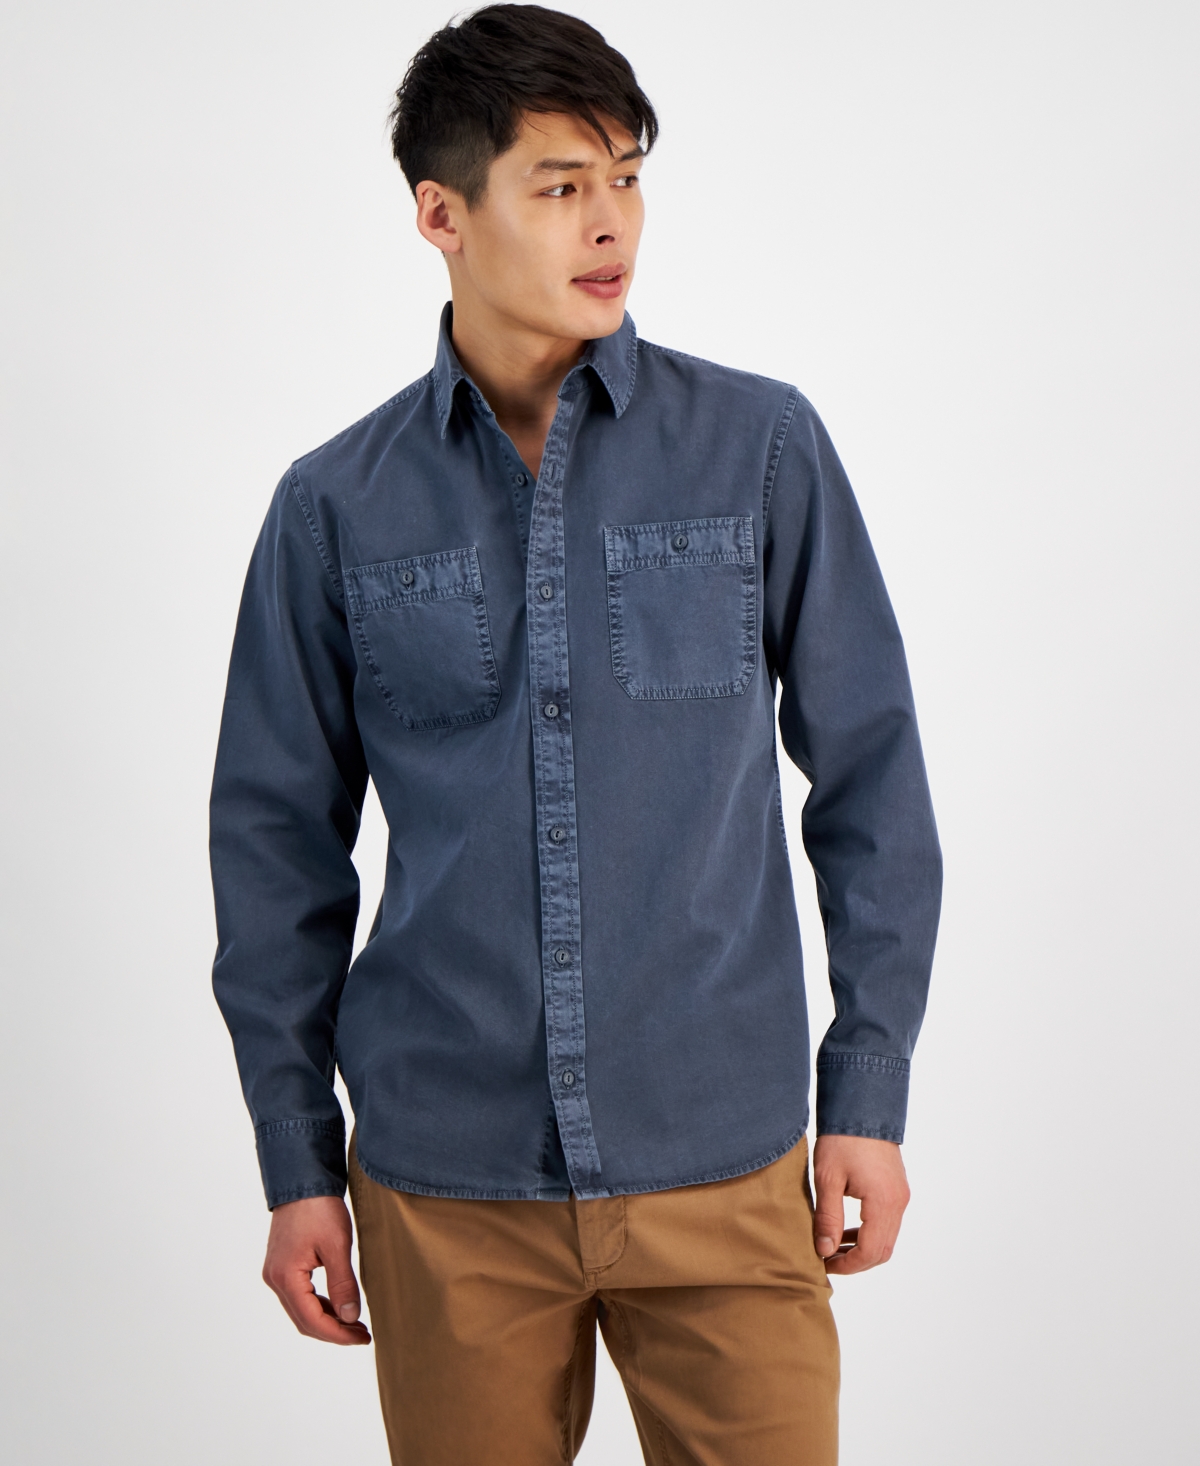 Men's Long Sleeve Twill Shirt, Created for Macy's - Medium Green